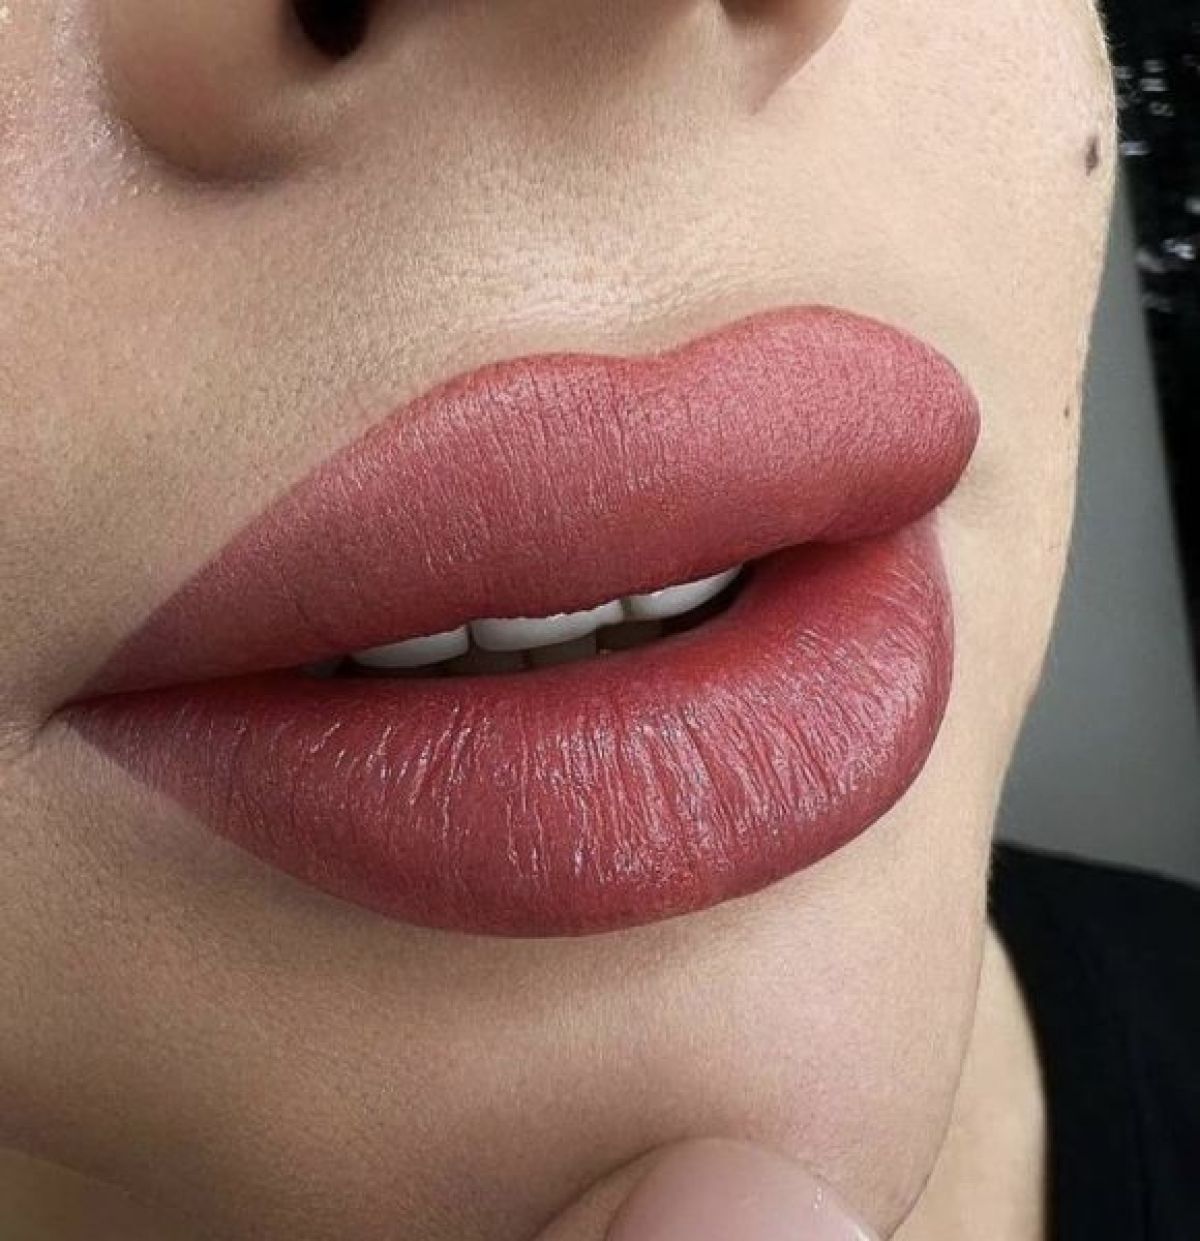 Candy Lips / Maquillage permanent  à Wattrelos (59) Par Donya - Estheca